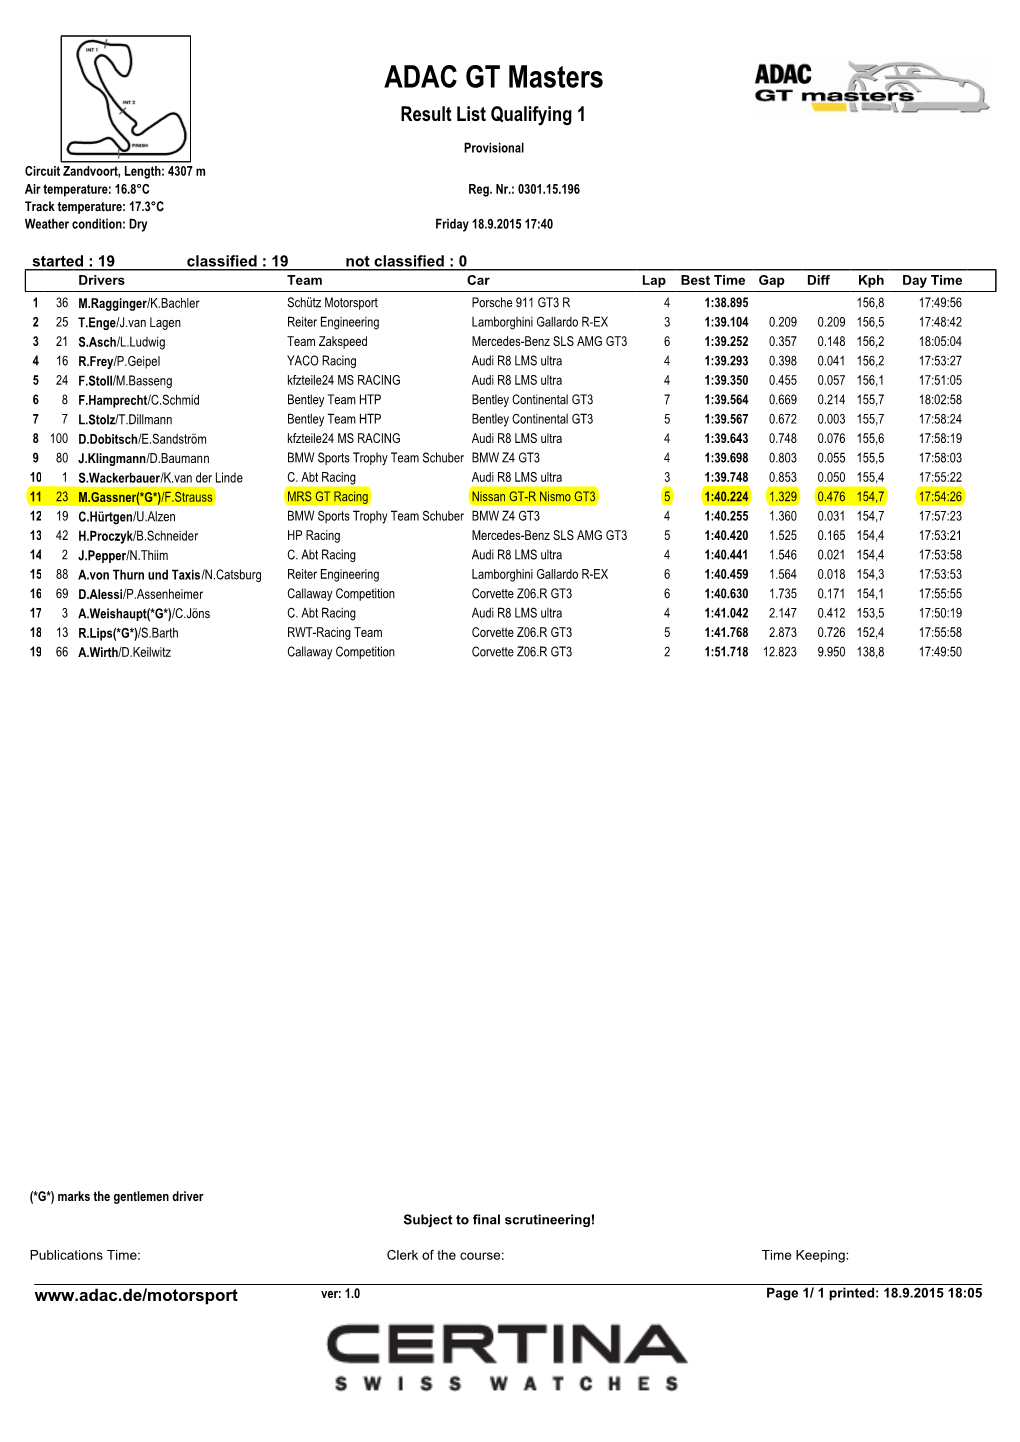 ADAC GT Masters Result List Qualifying 1